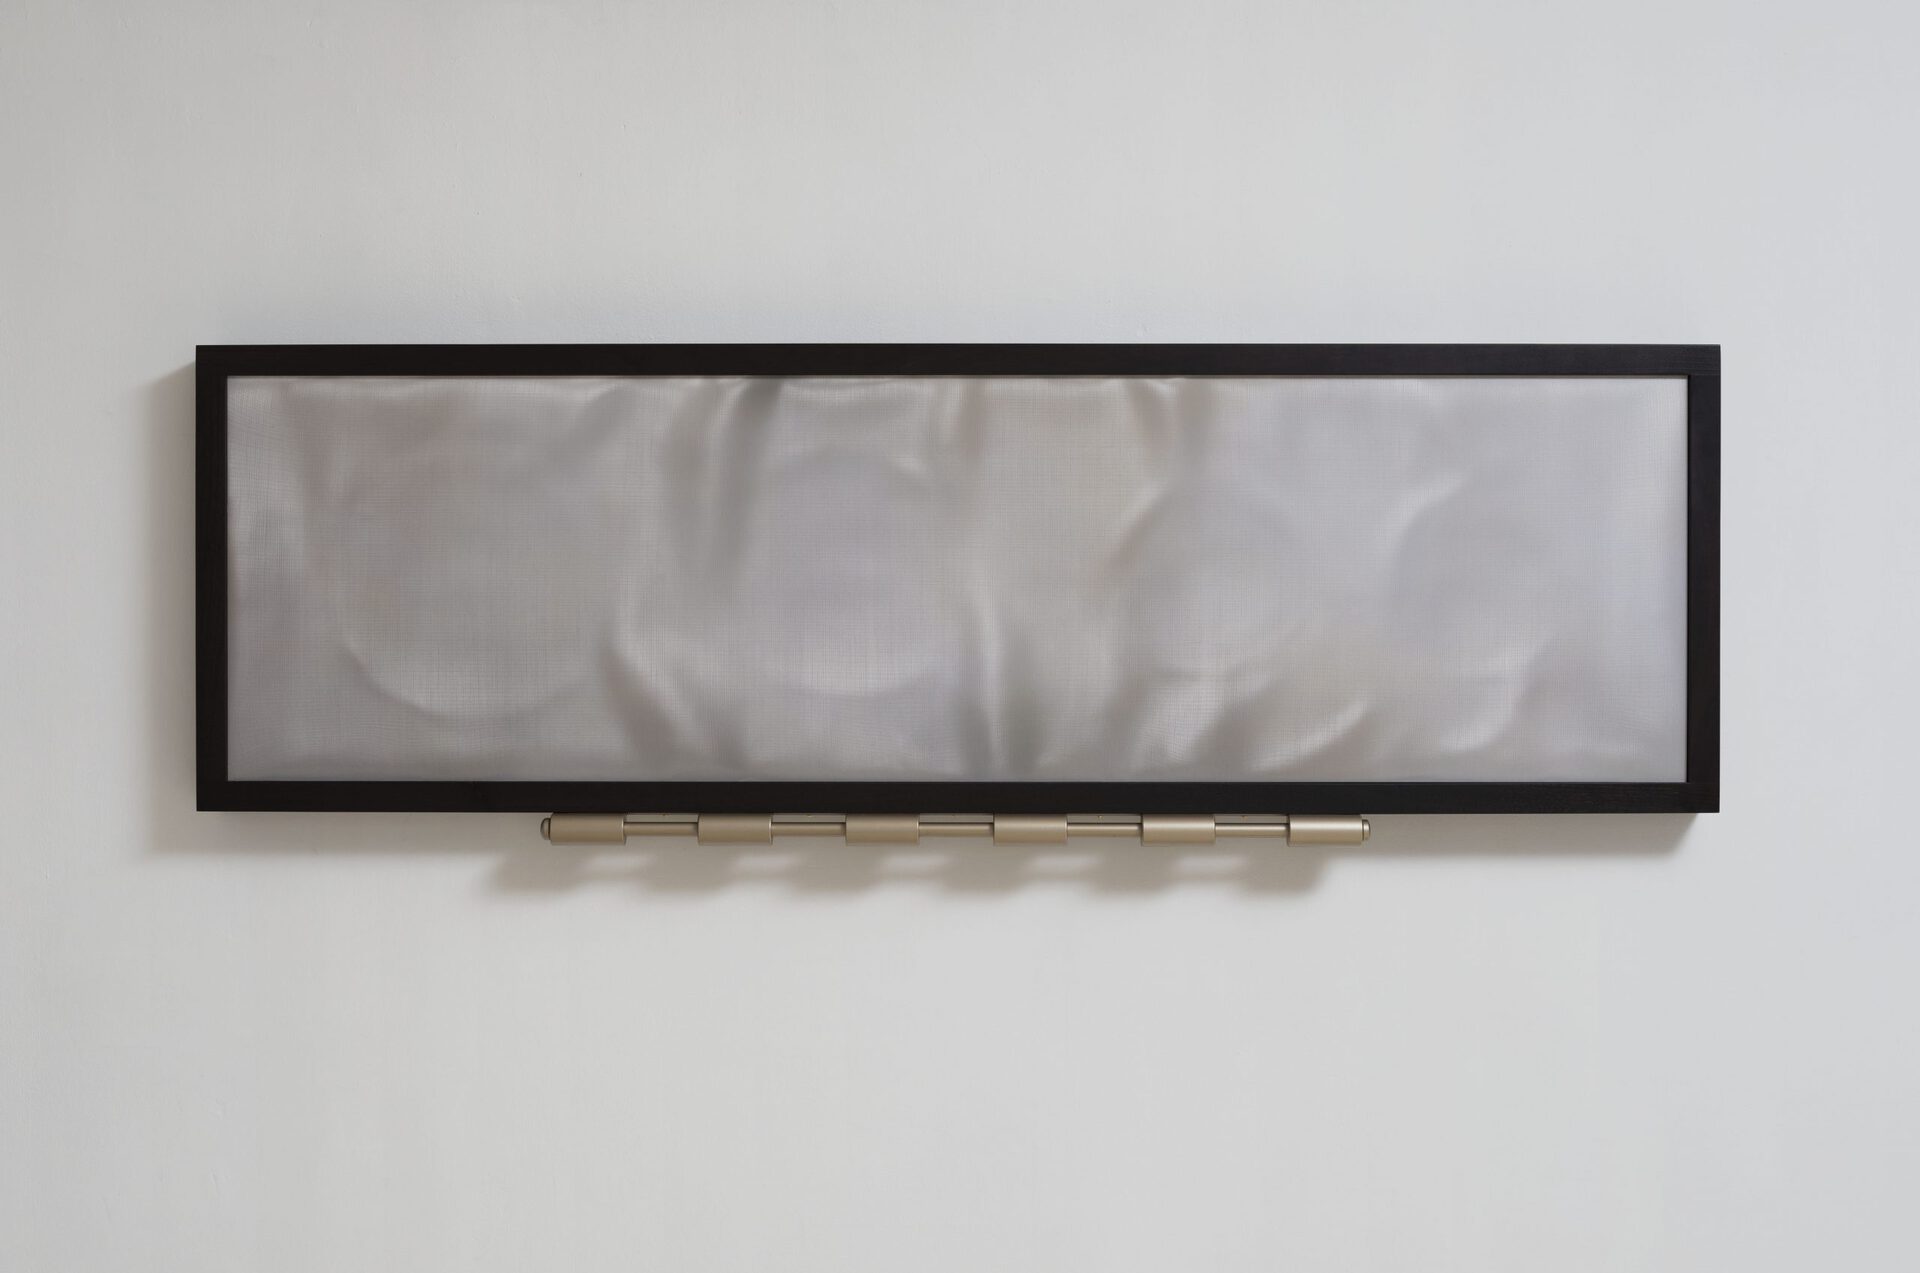 Adi Fluman, Untitled (Coin Case), 2021. Digital sculpture, inkjet printed on paper in artist’s frame (American walnut wood, aluminum), 207.5×67.5×11 cm. Photo: Elad Sarig, Courtesy of the artist and Dvir Gallery, Tel Aviv/Brussels.